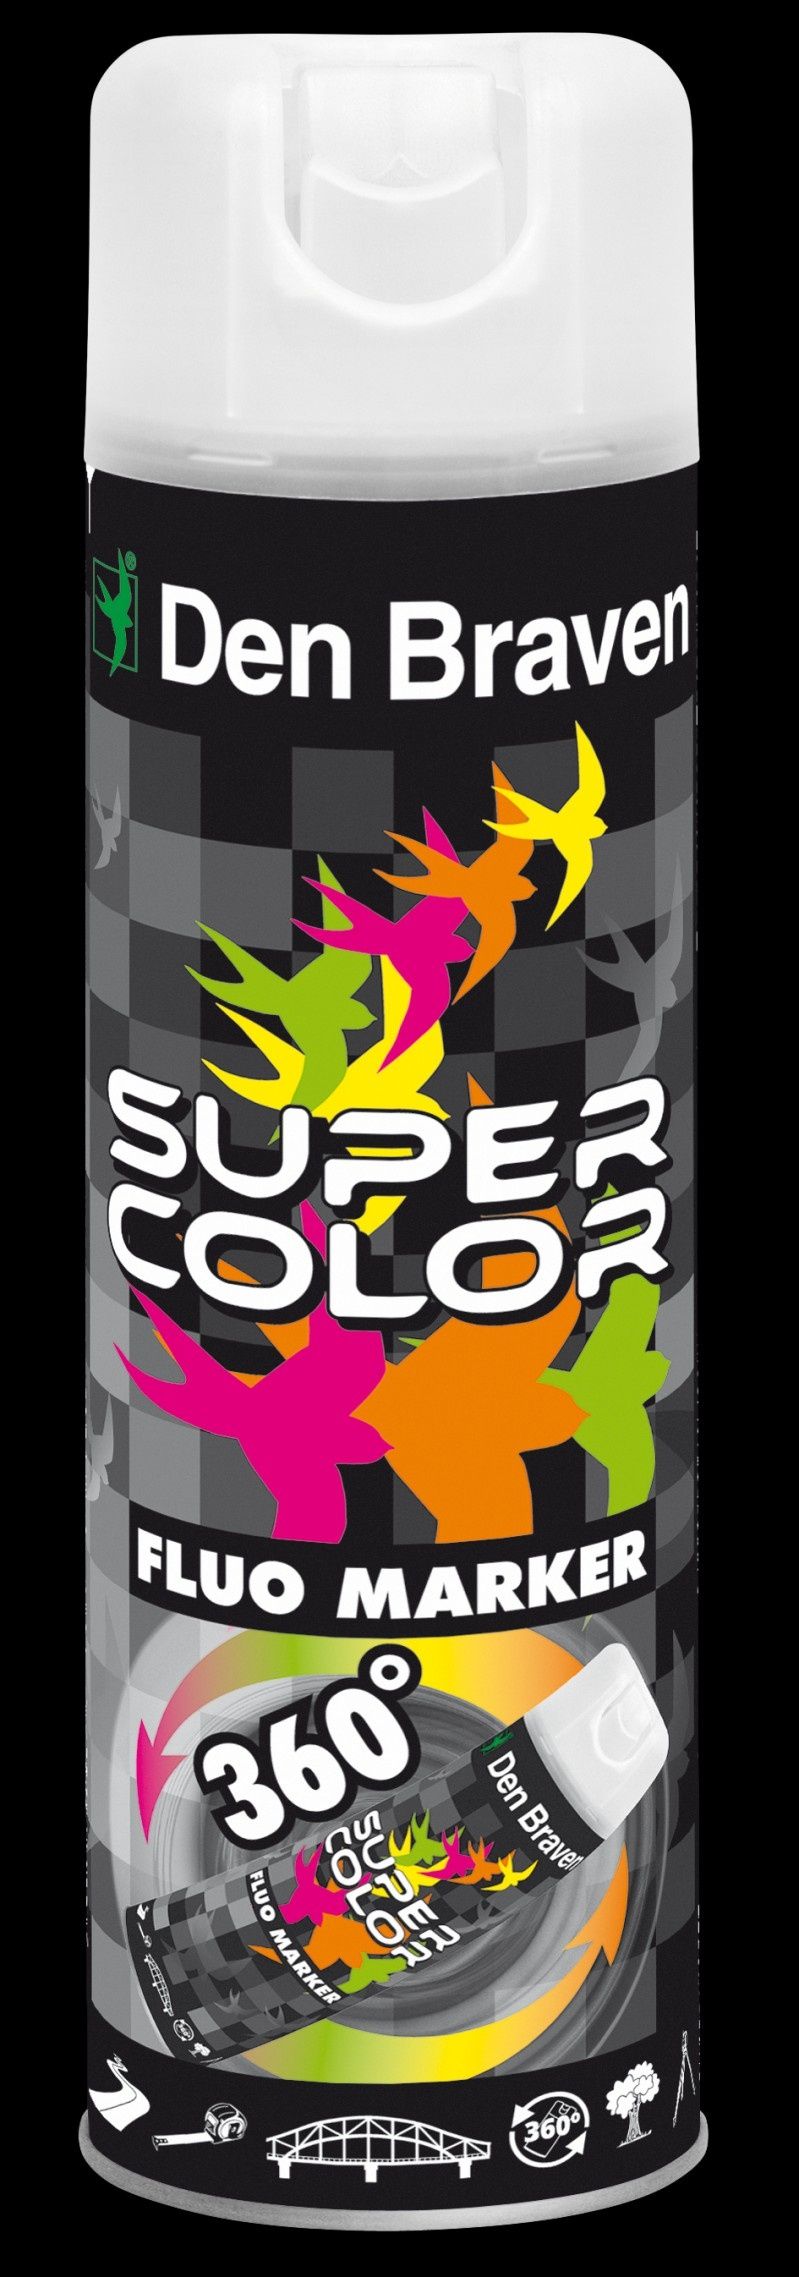 Zmajstruj coś na wiosnę z produktami z linii Super Color marki Den Braven